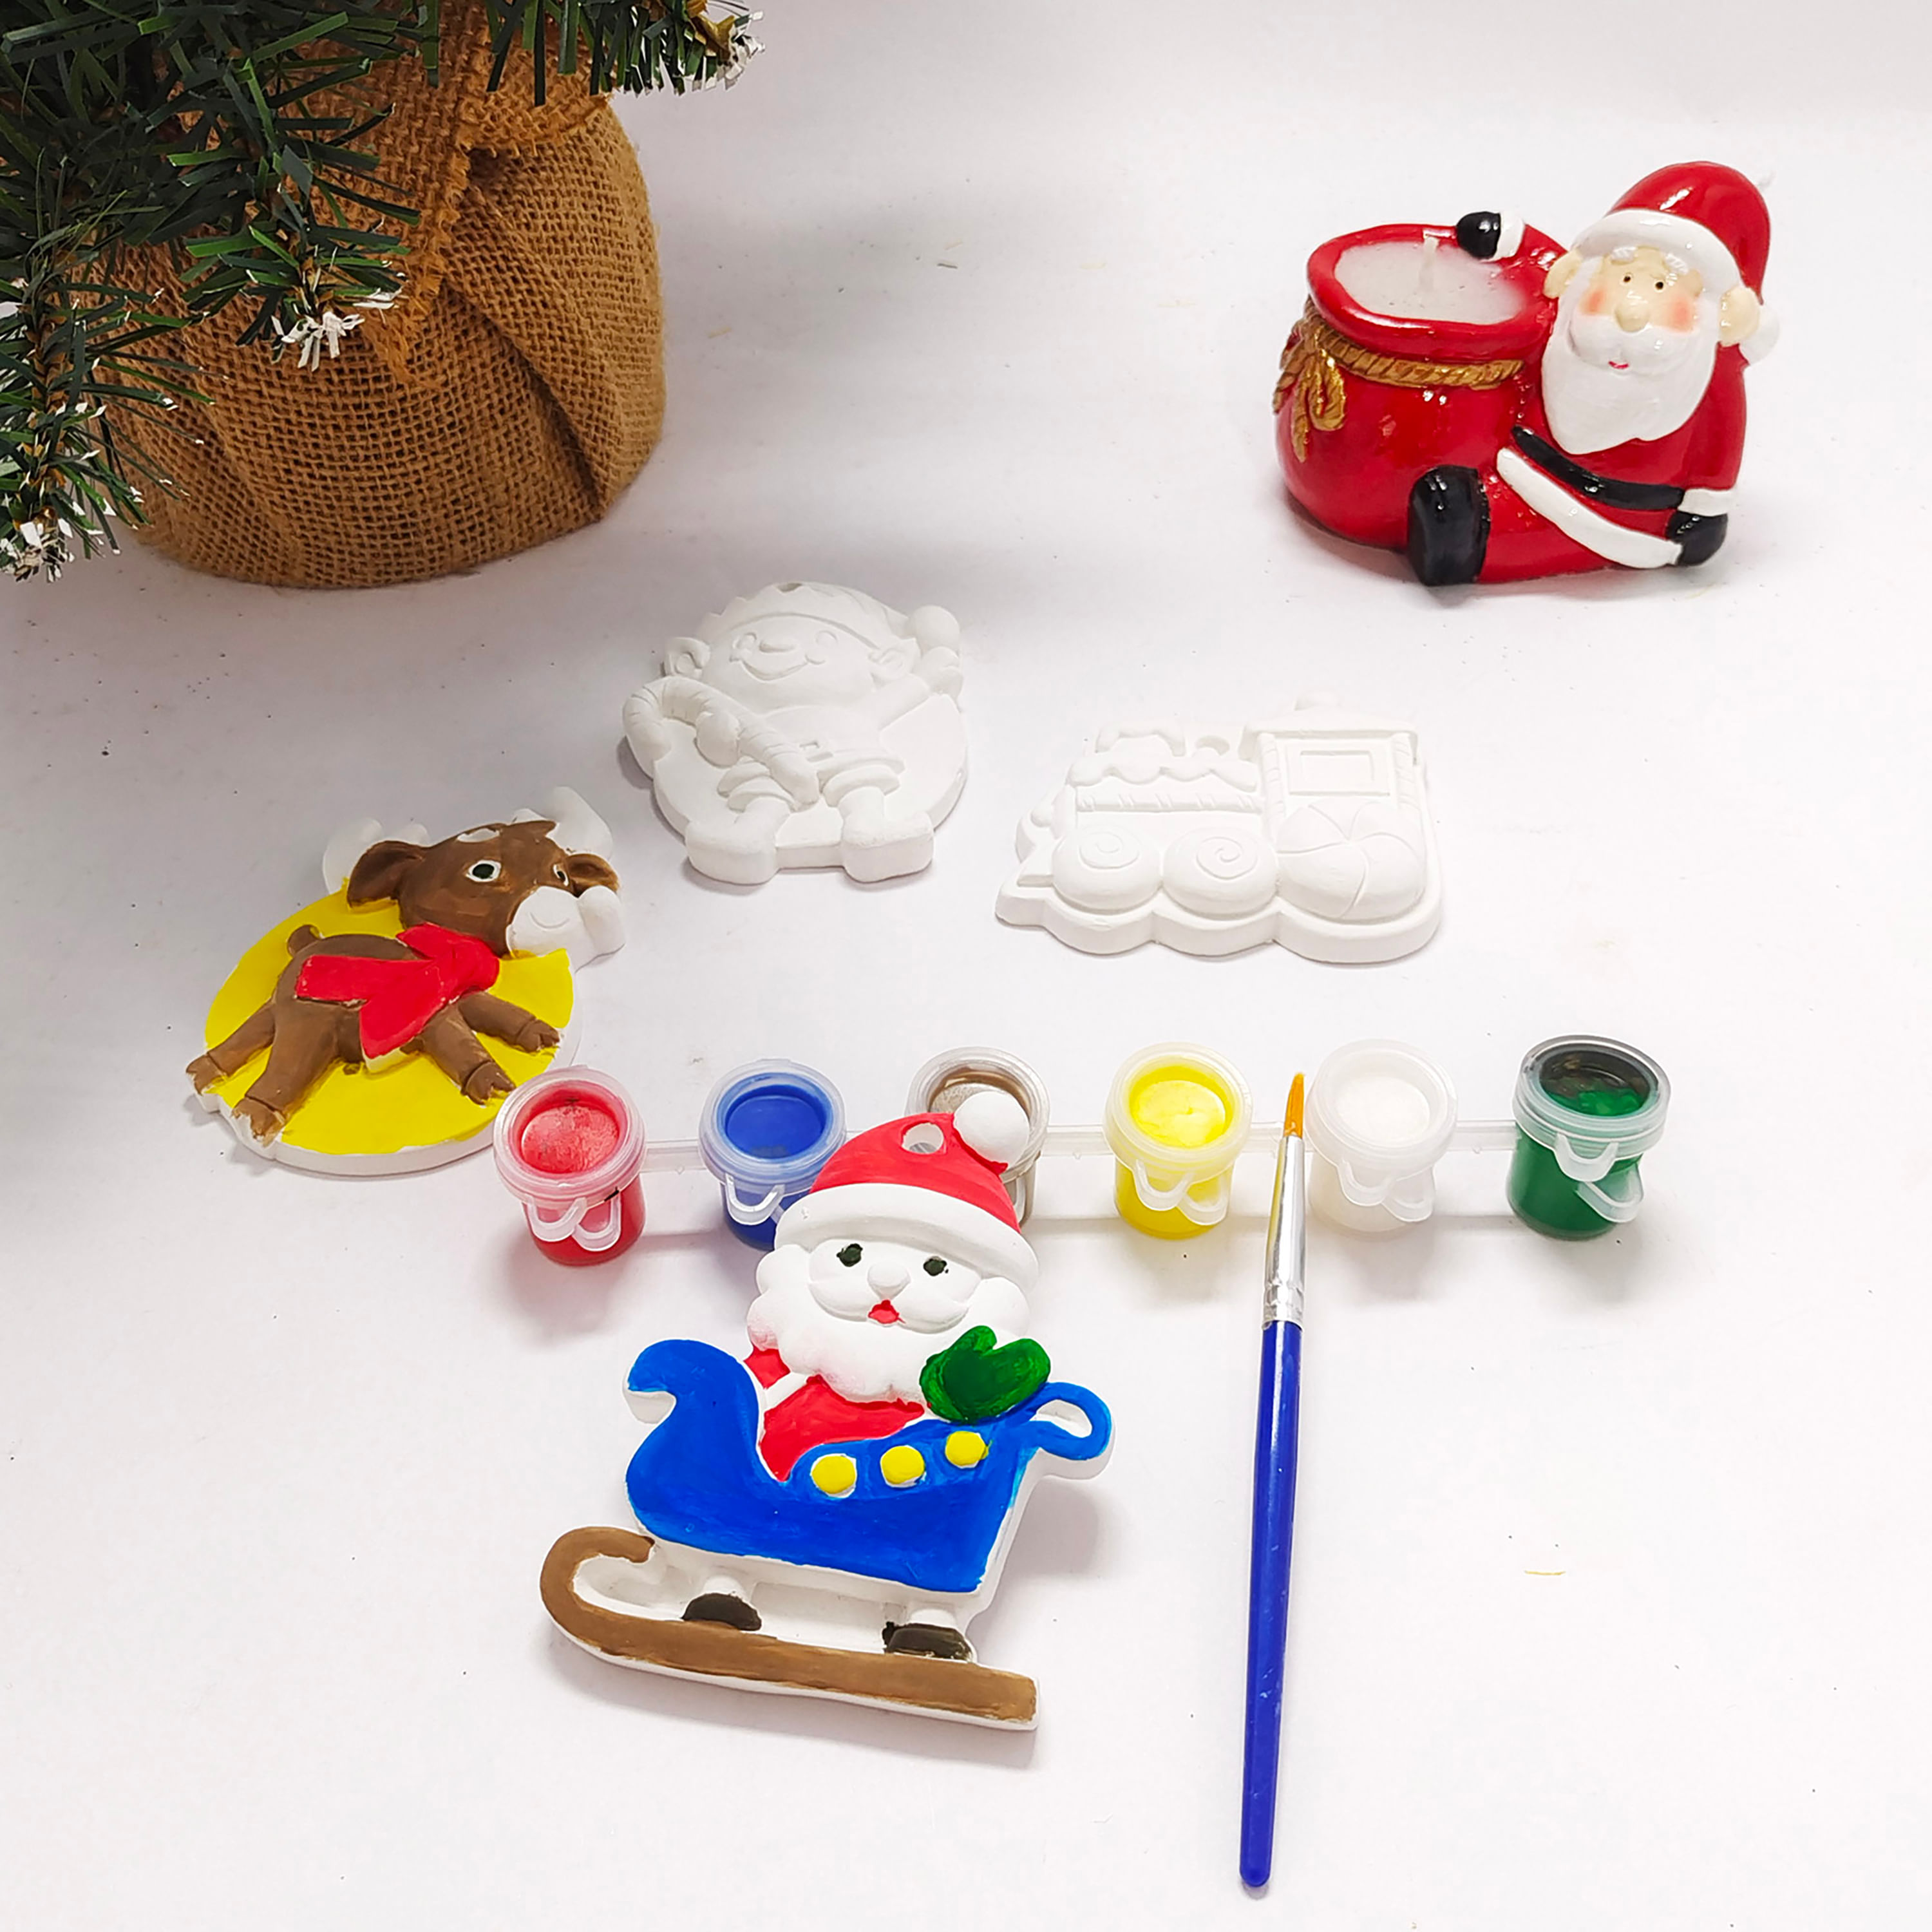 FORMIZON Kit de Pintura Lámpara Niños, Figuras Para Pintar Kit, Pintar  Juguete Manualidades, Kit Creativo de Bricolaje Regalo Navidad Cumpleaños  para